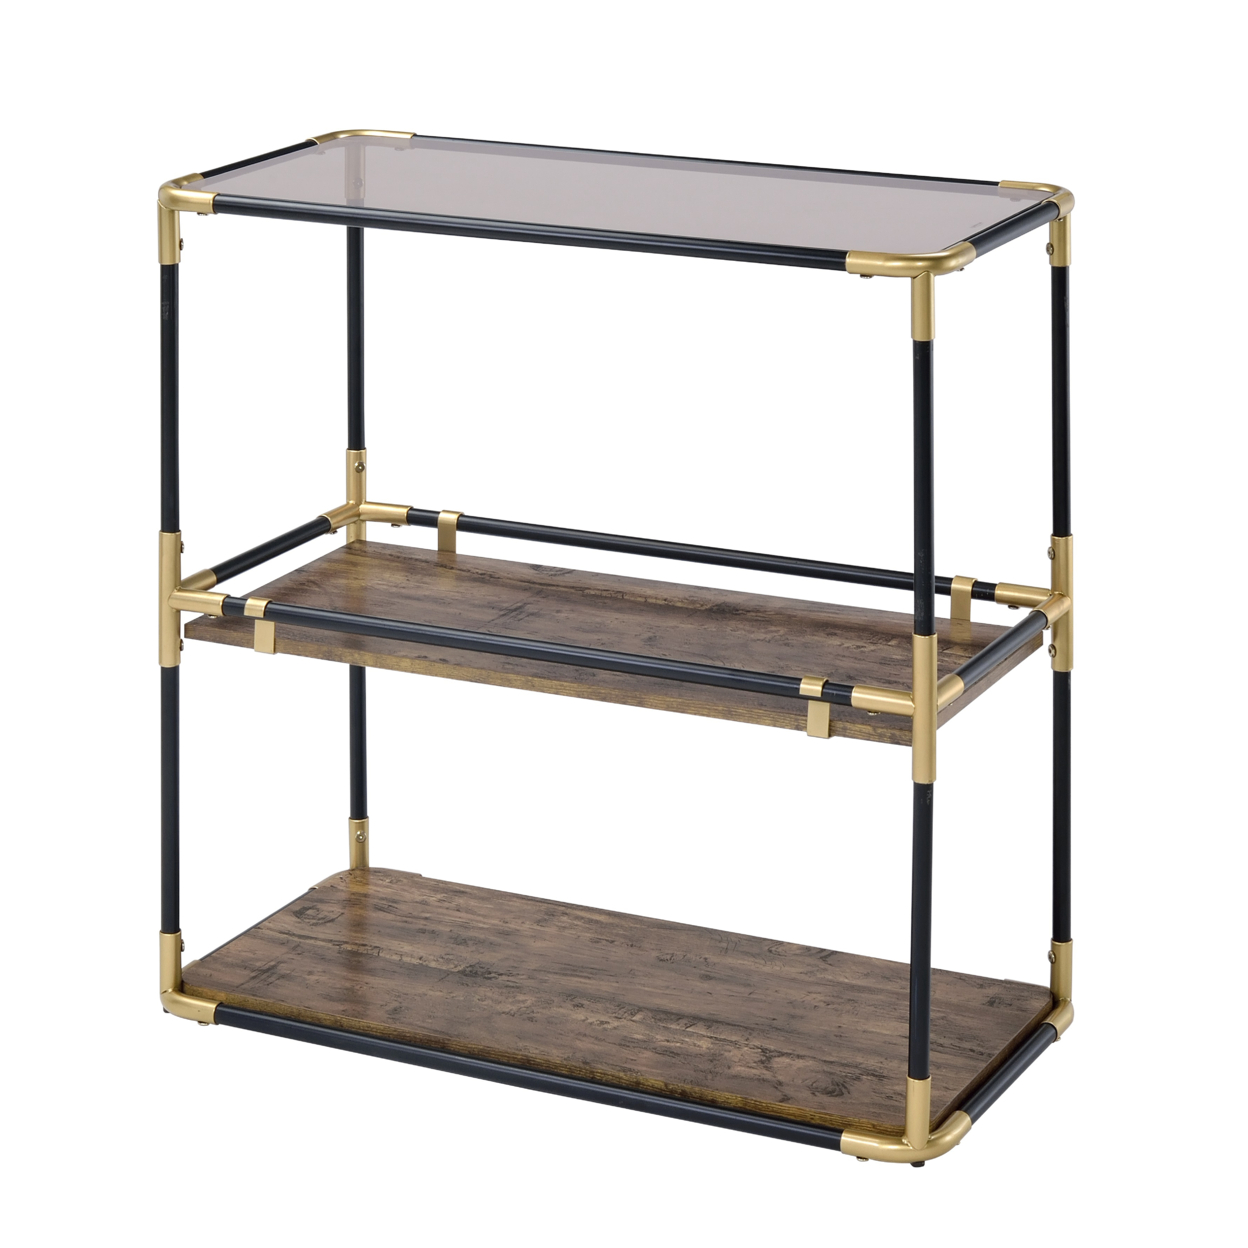 Rechange Glass Top Console Table Metal Tubular Framing And Wooden Shelves, Black And Brown- Saltoro Sherpi